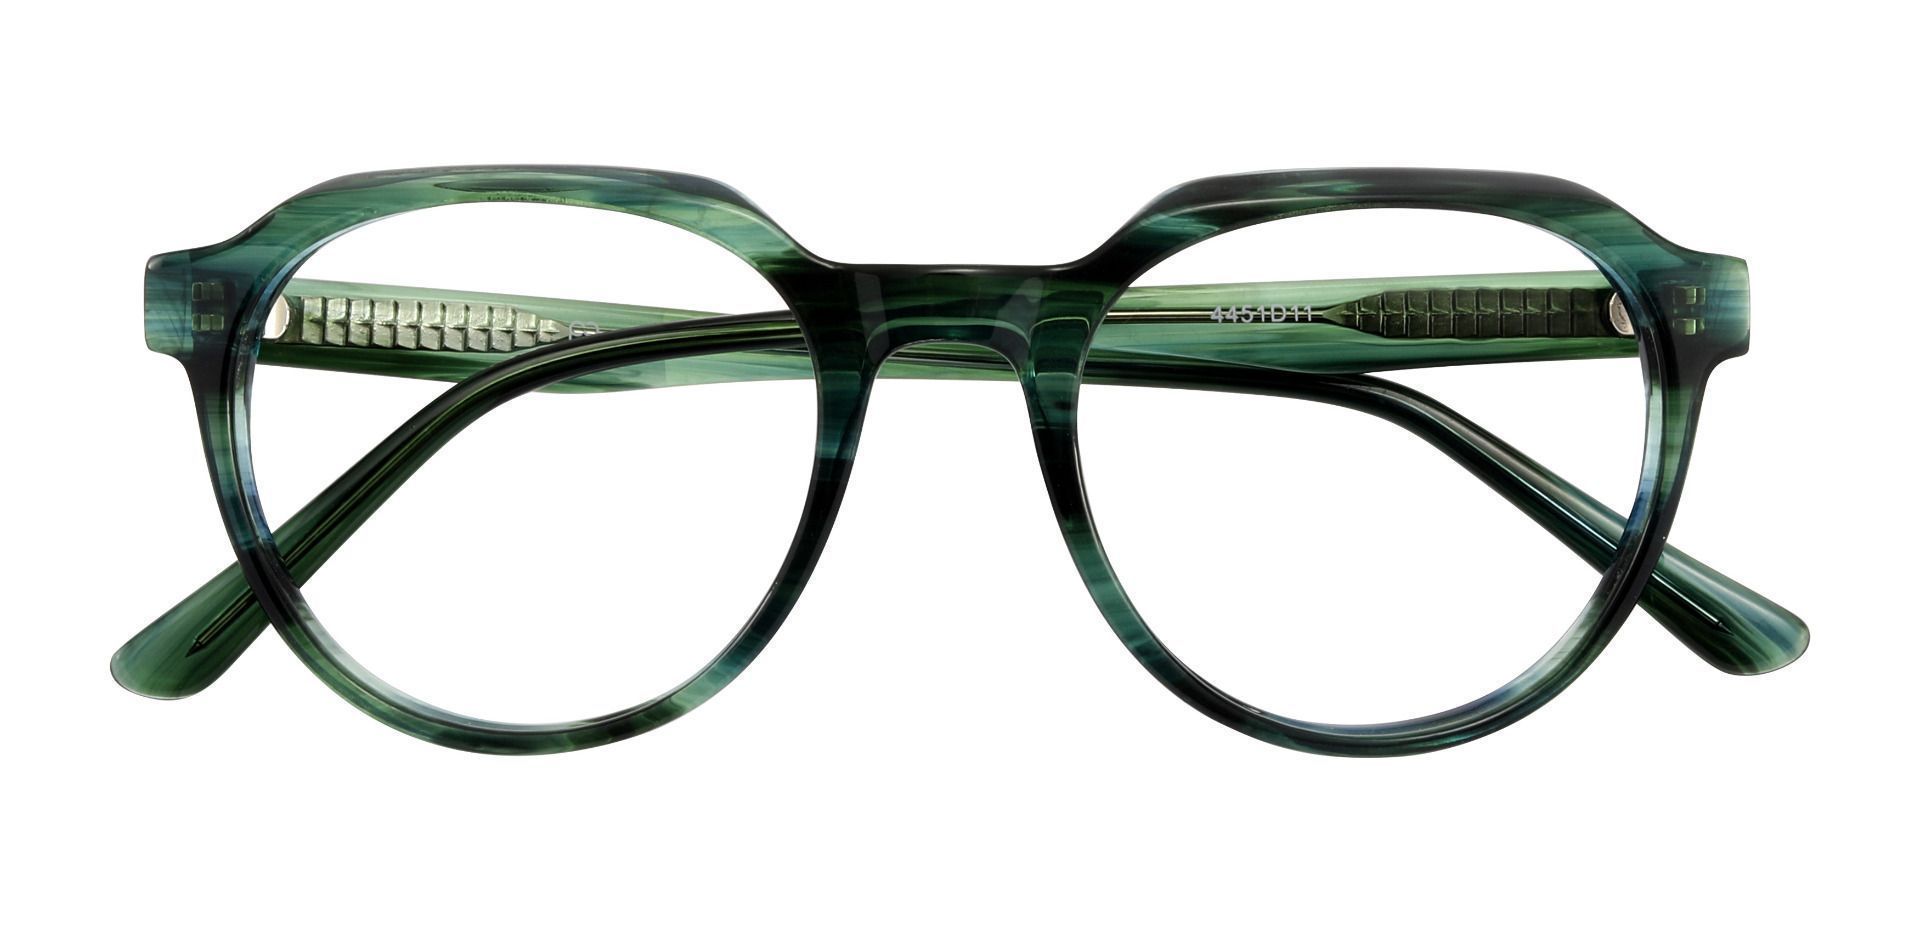 Alfalfa Oval Prescription Glasses - Green